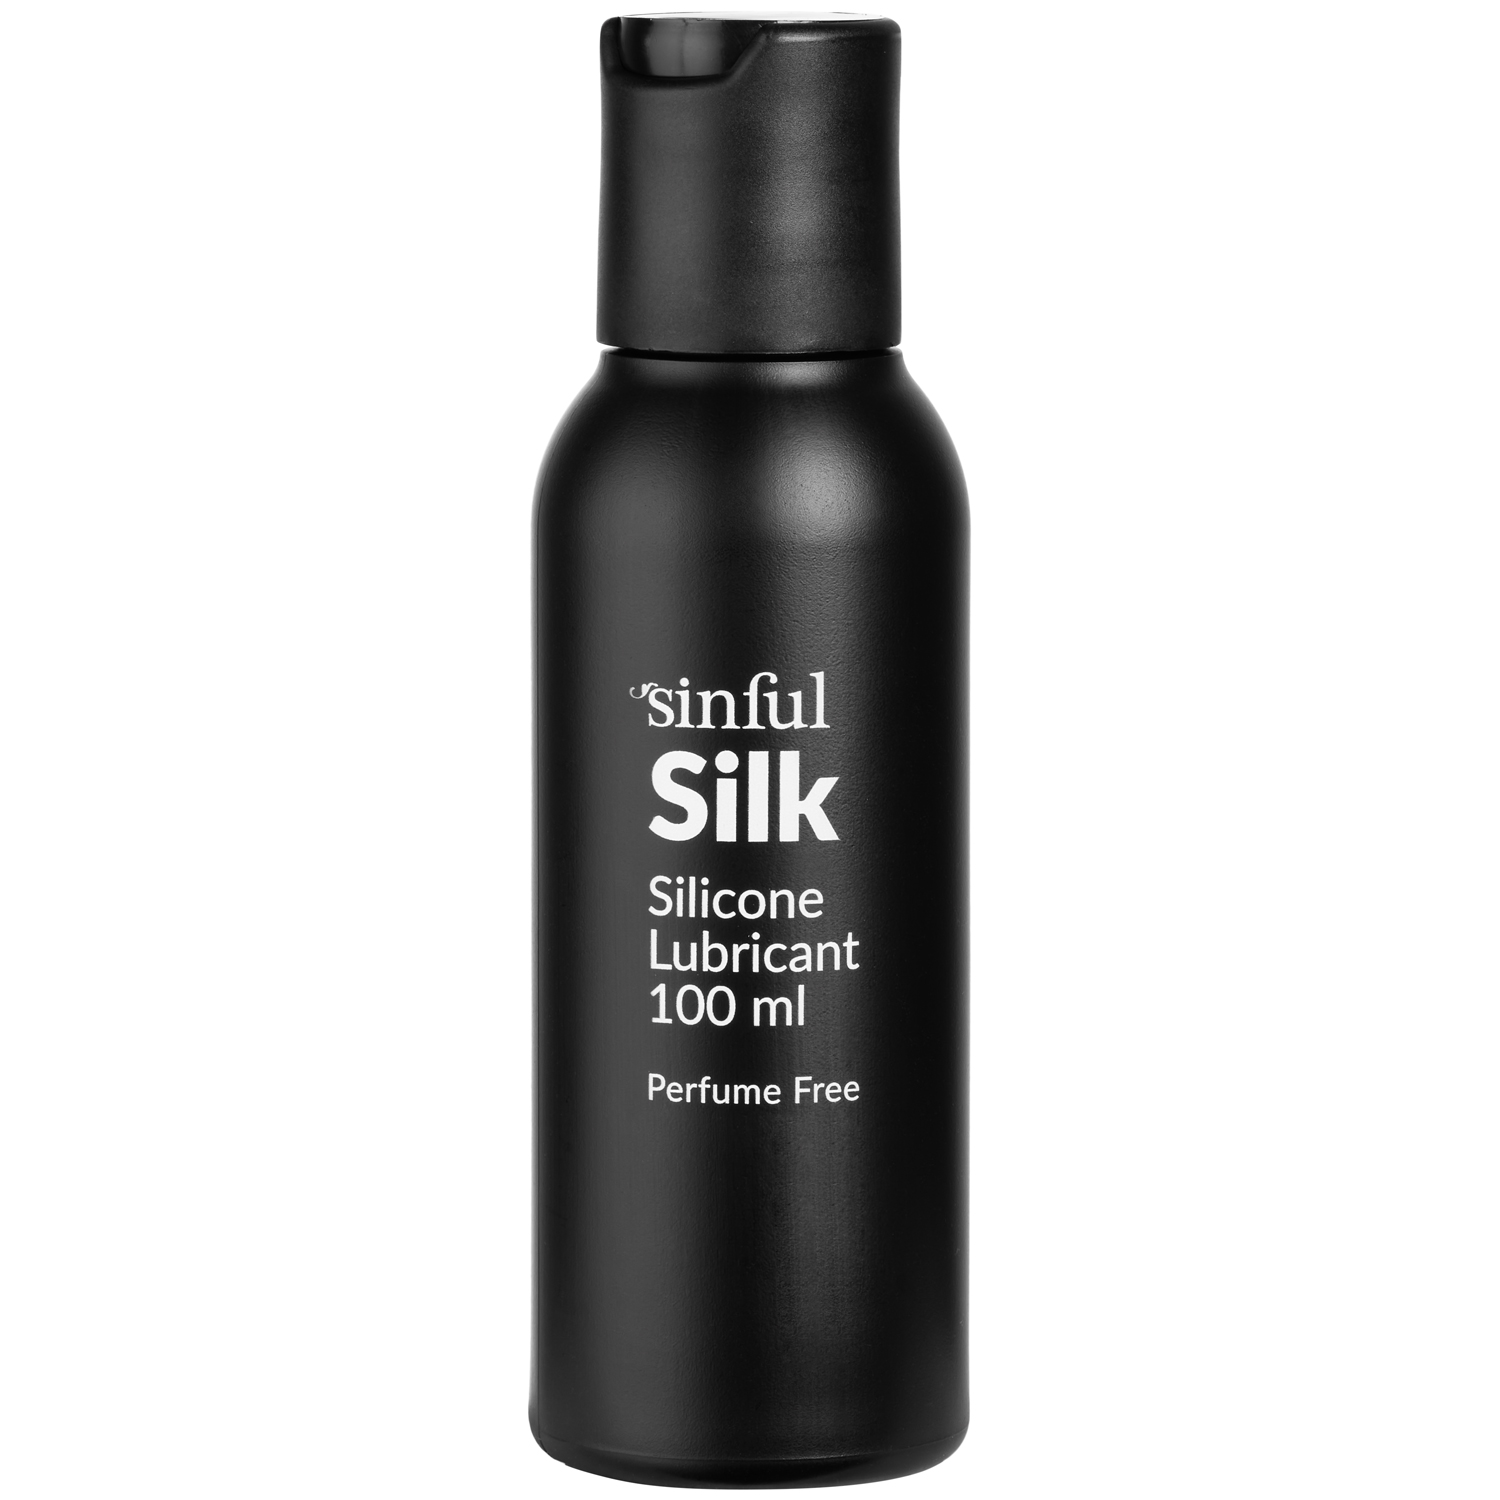 Sinful Silk Silikonglidmedel 100 ml - Klar